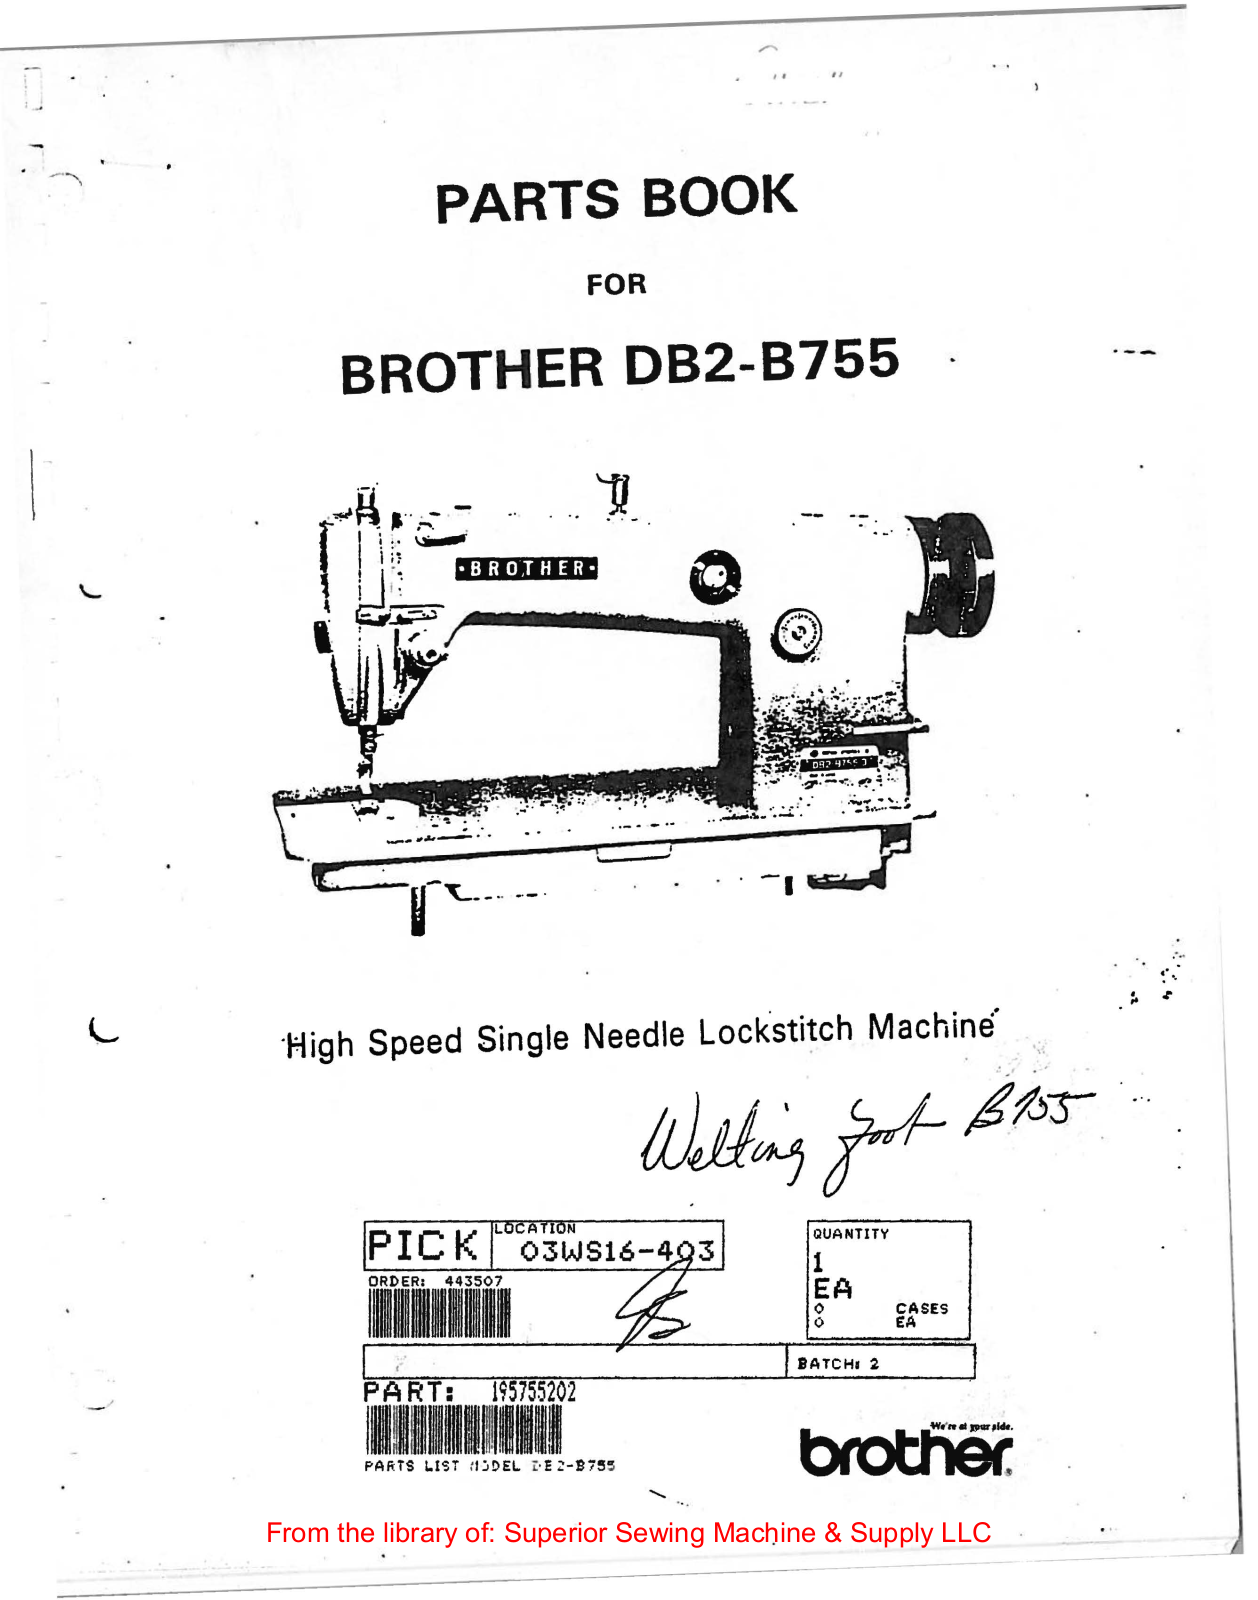 Brother DB2-B755 Manual